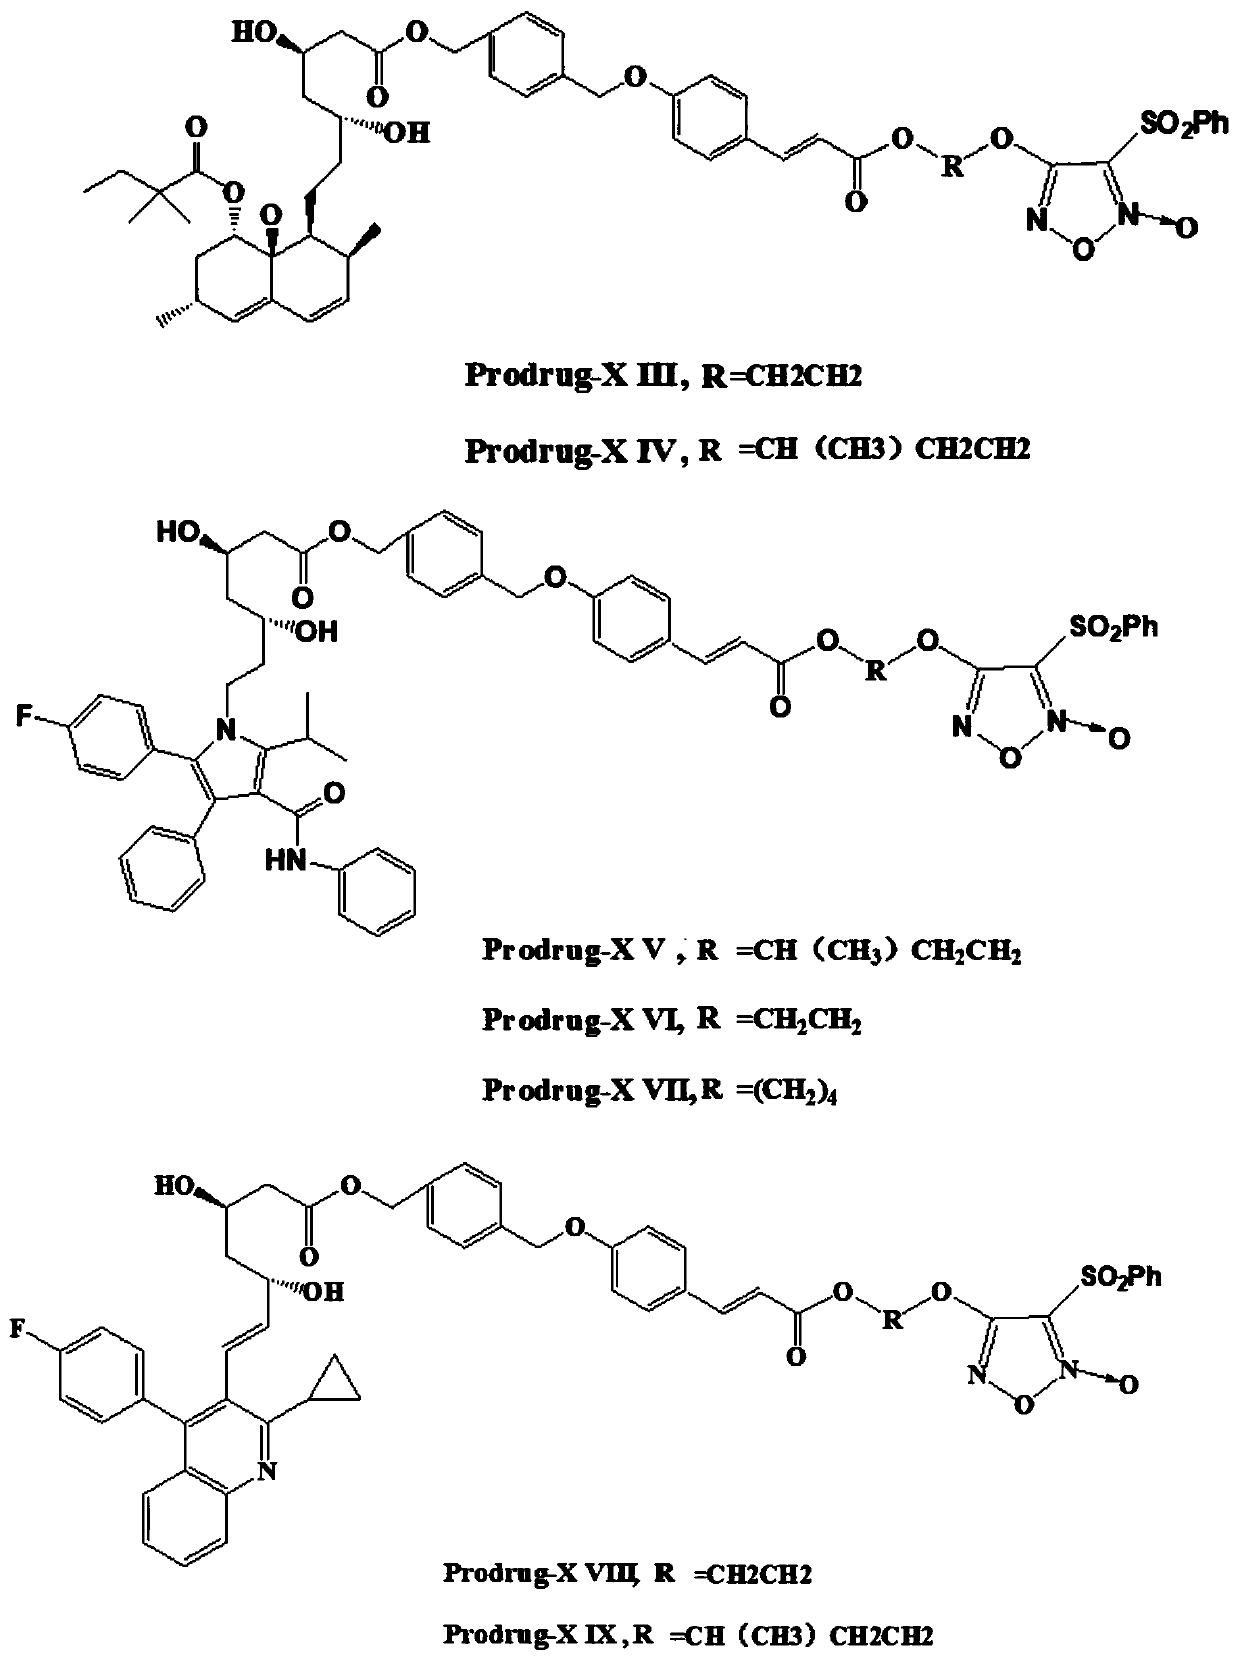 Furazan nitroxide NO donor statin derivatives and preparation method thereof